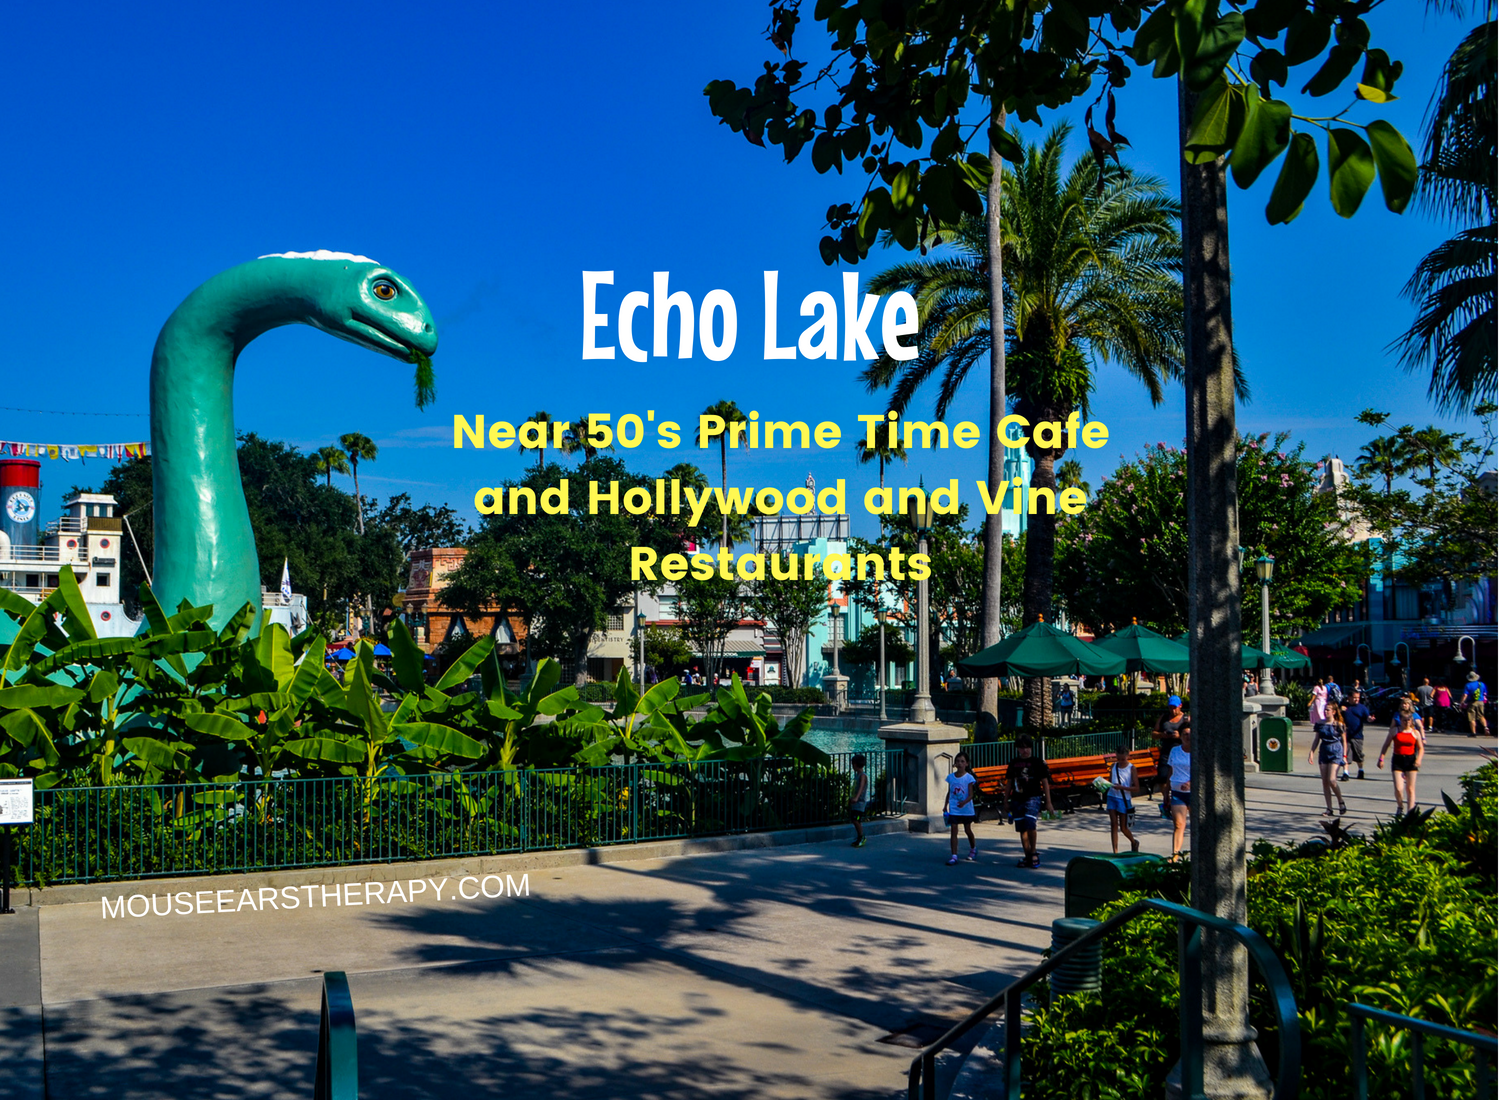 The  promenade near Echo Lake, a quiet area located in Disney's Hollywood Studios.